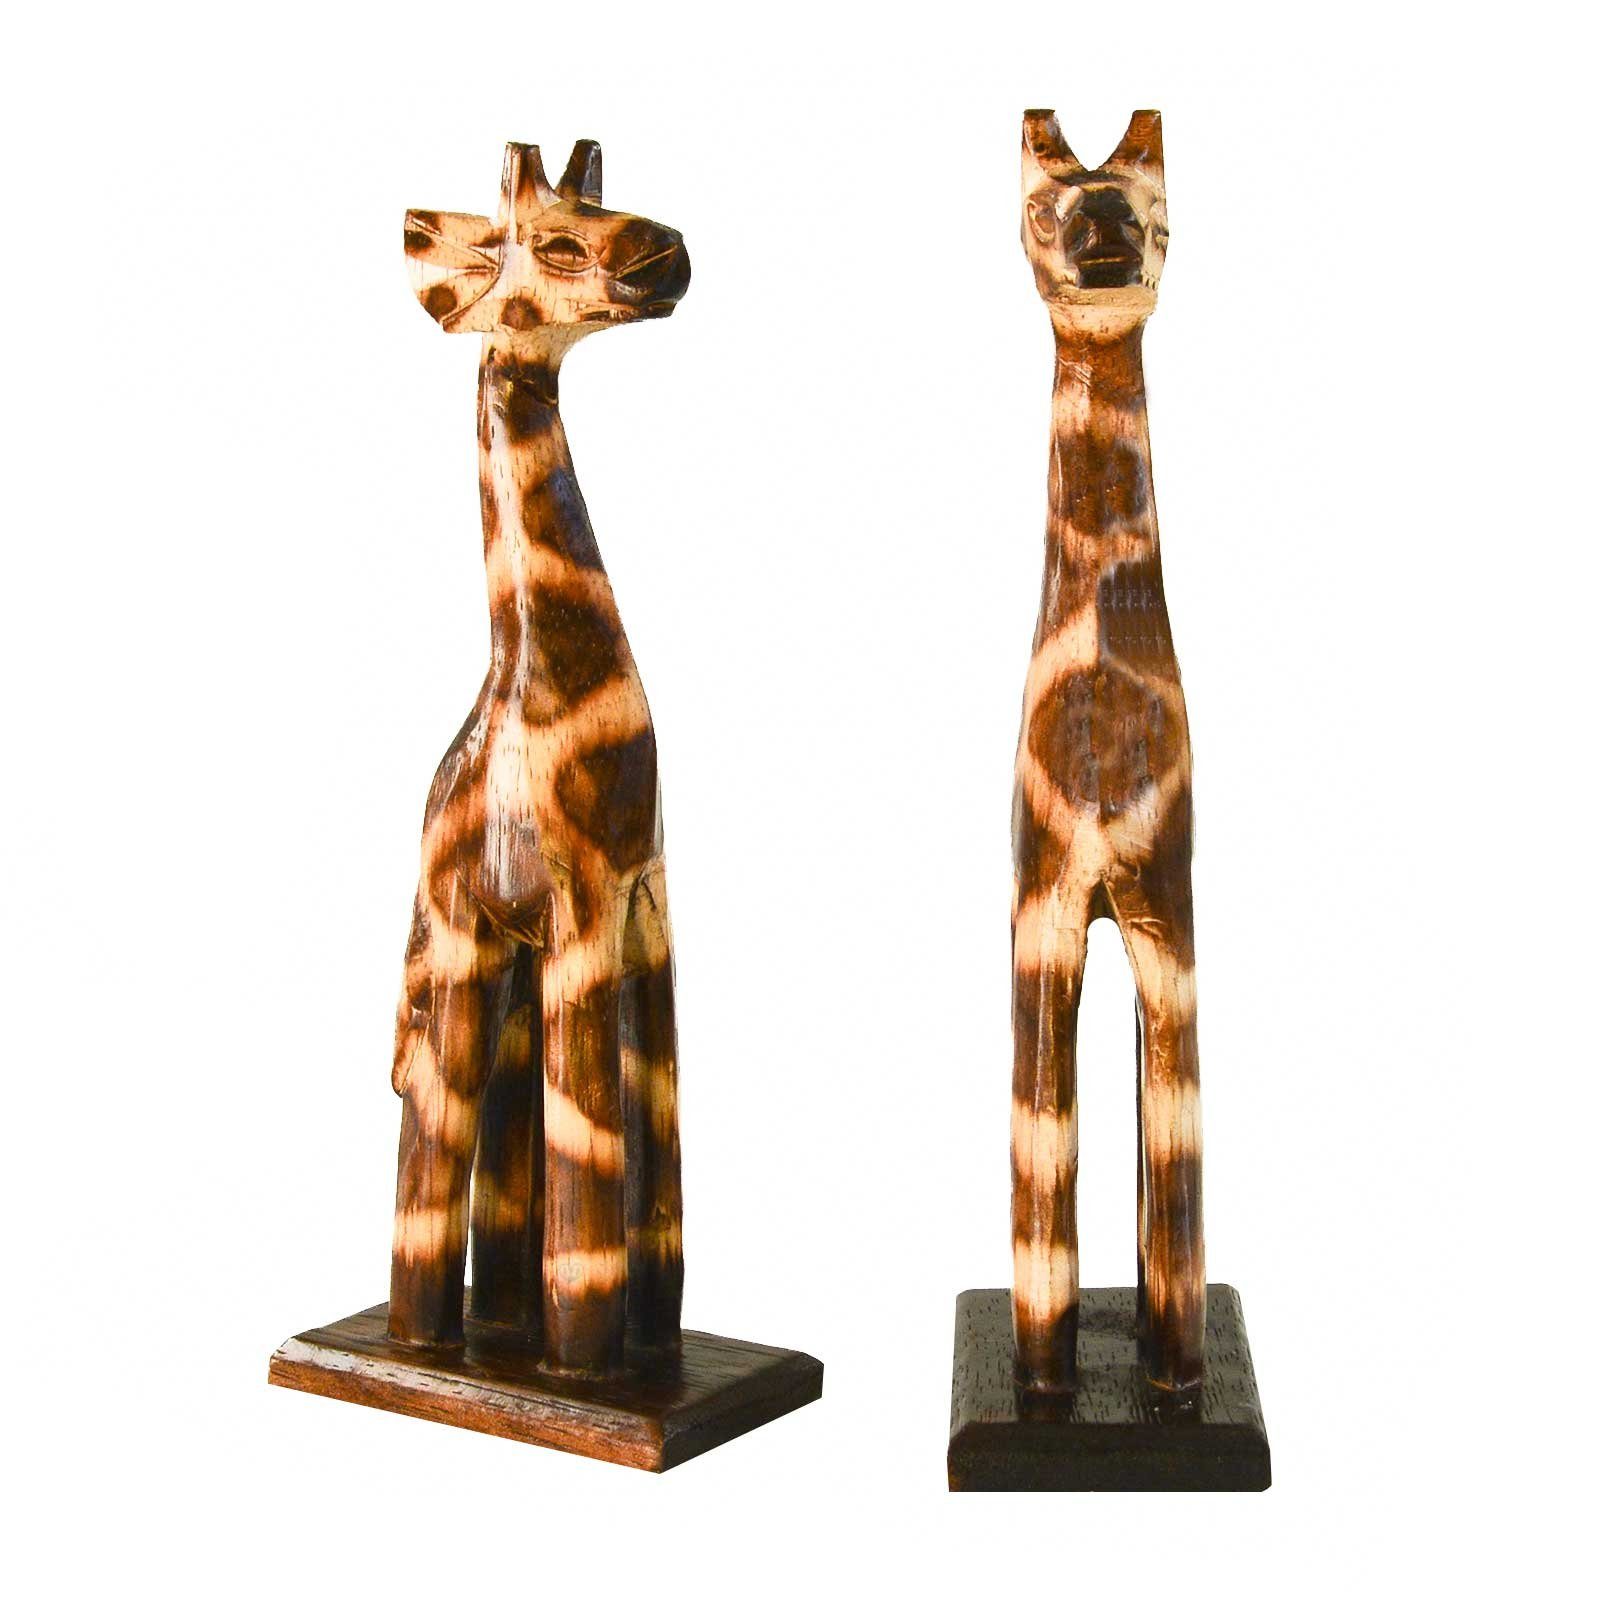 ca. - cm maDDma cm, Giraffe Grösse: Tierfigur 1 20 aus 20 Holz, Giraffe Deko-Giraffe,